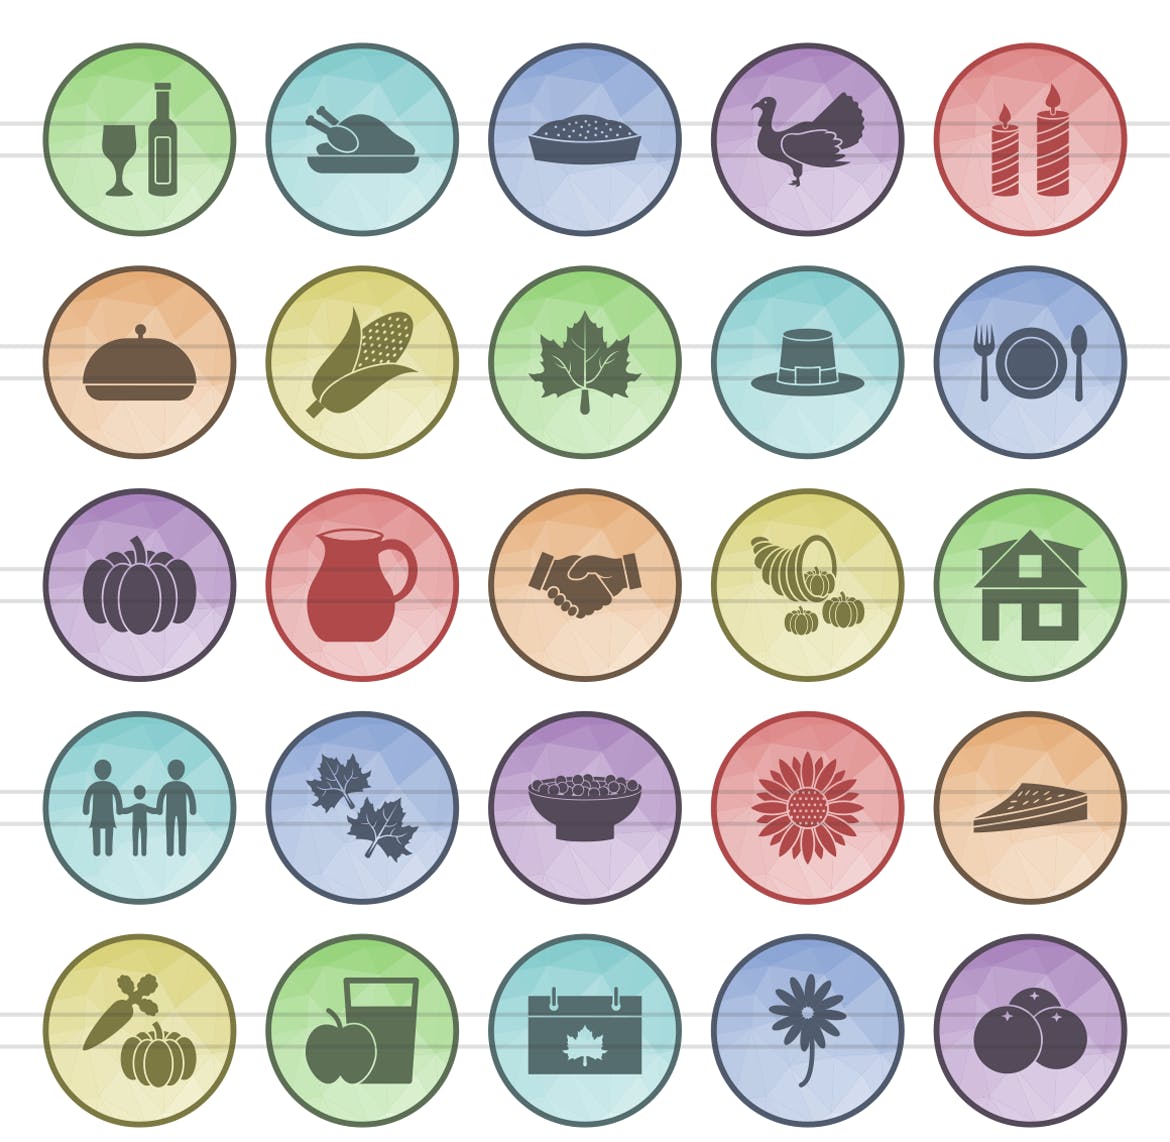 50枚感恩节主题圆形亿图网易图库精选图标素材 50 Thanksgiving Filled Low Poly Icons插图(1)